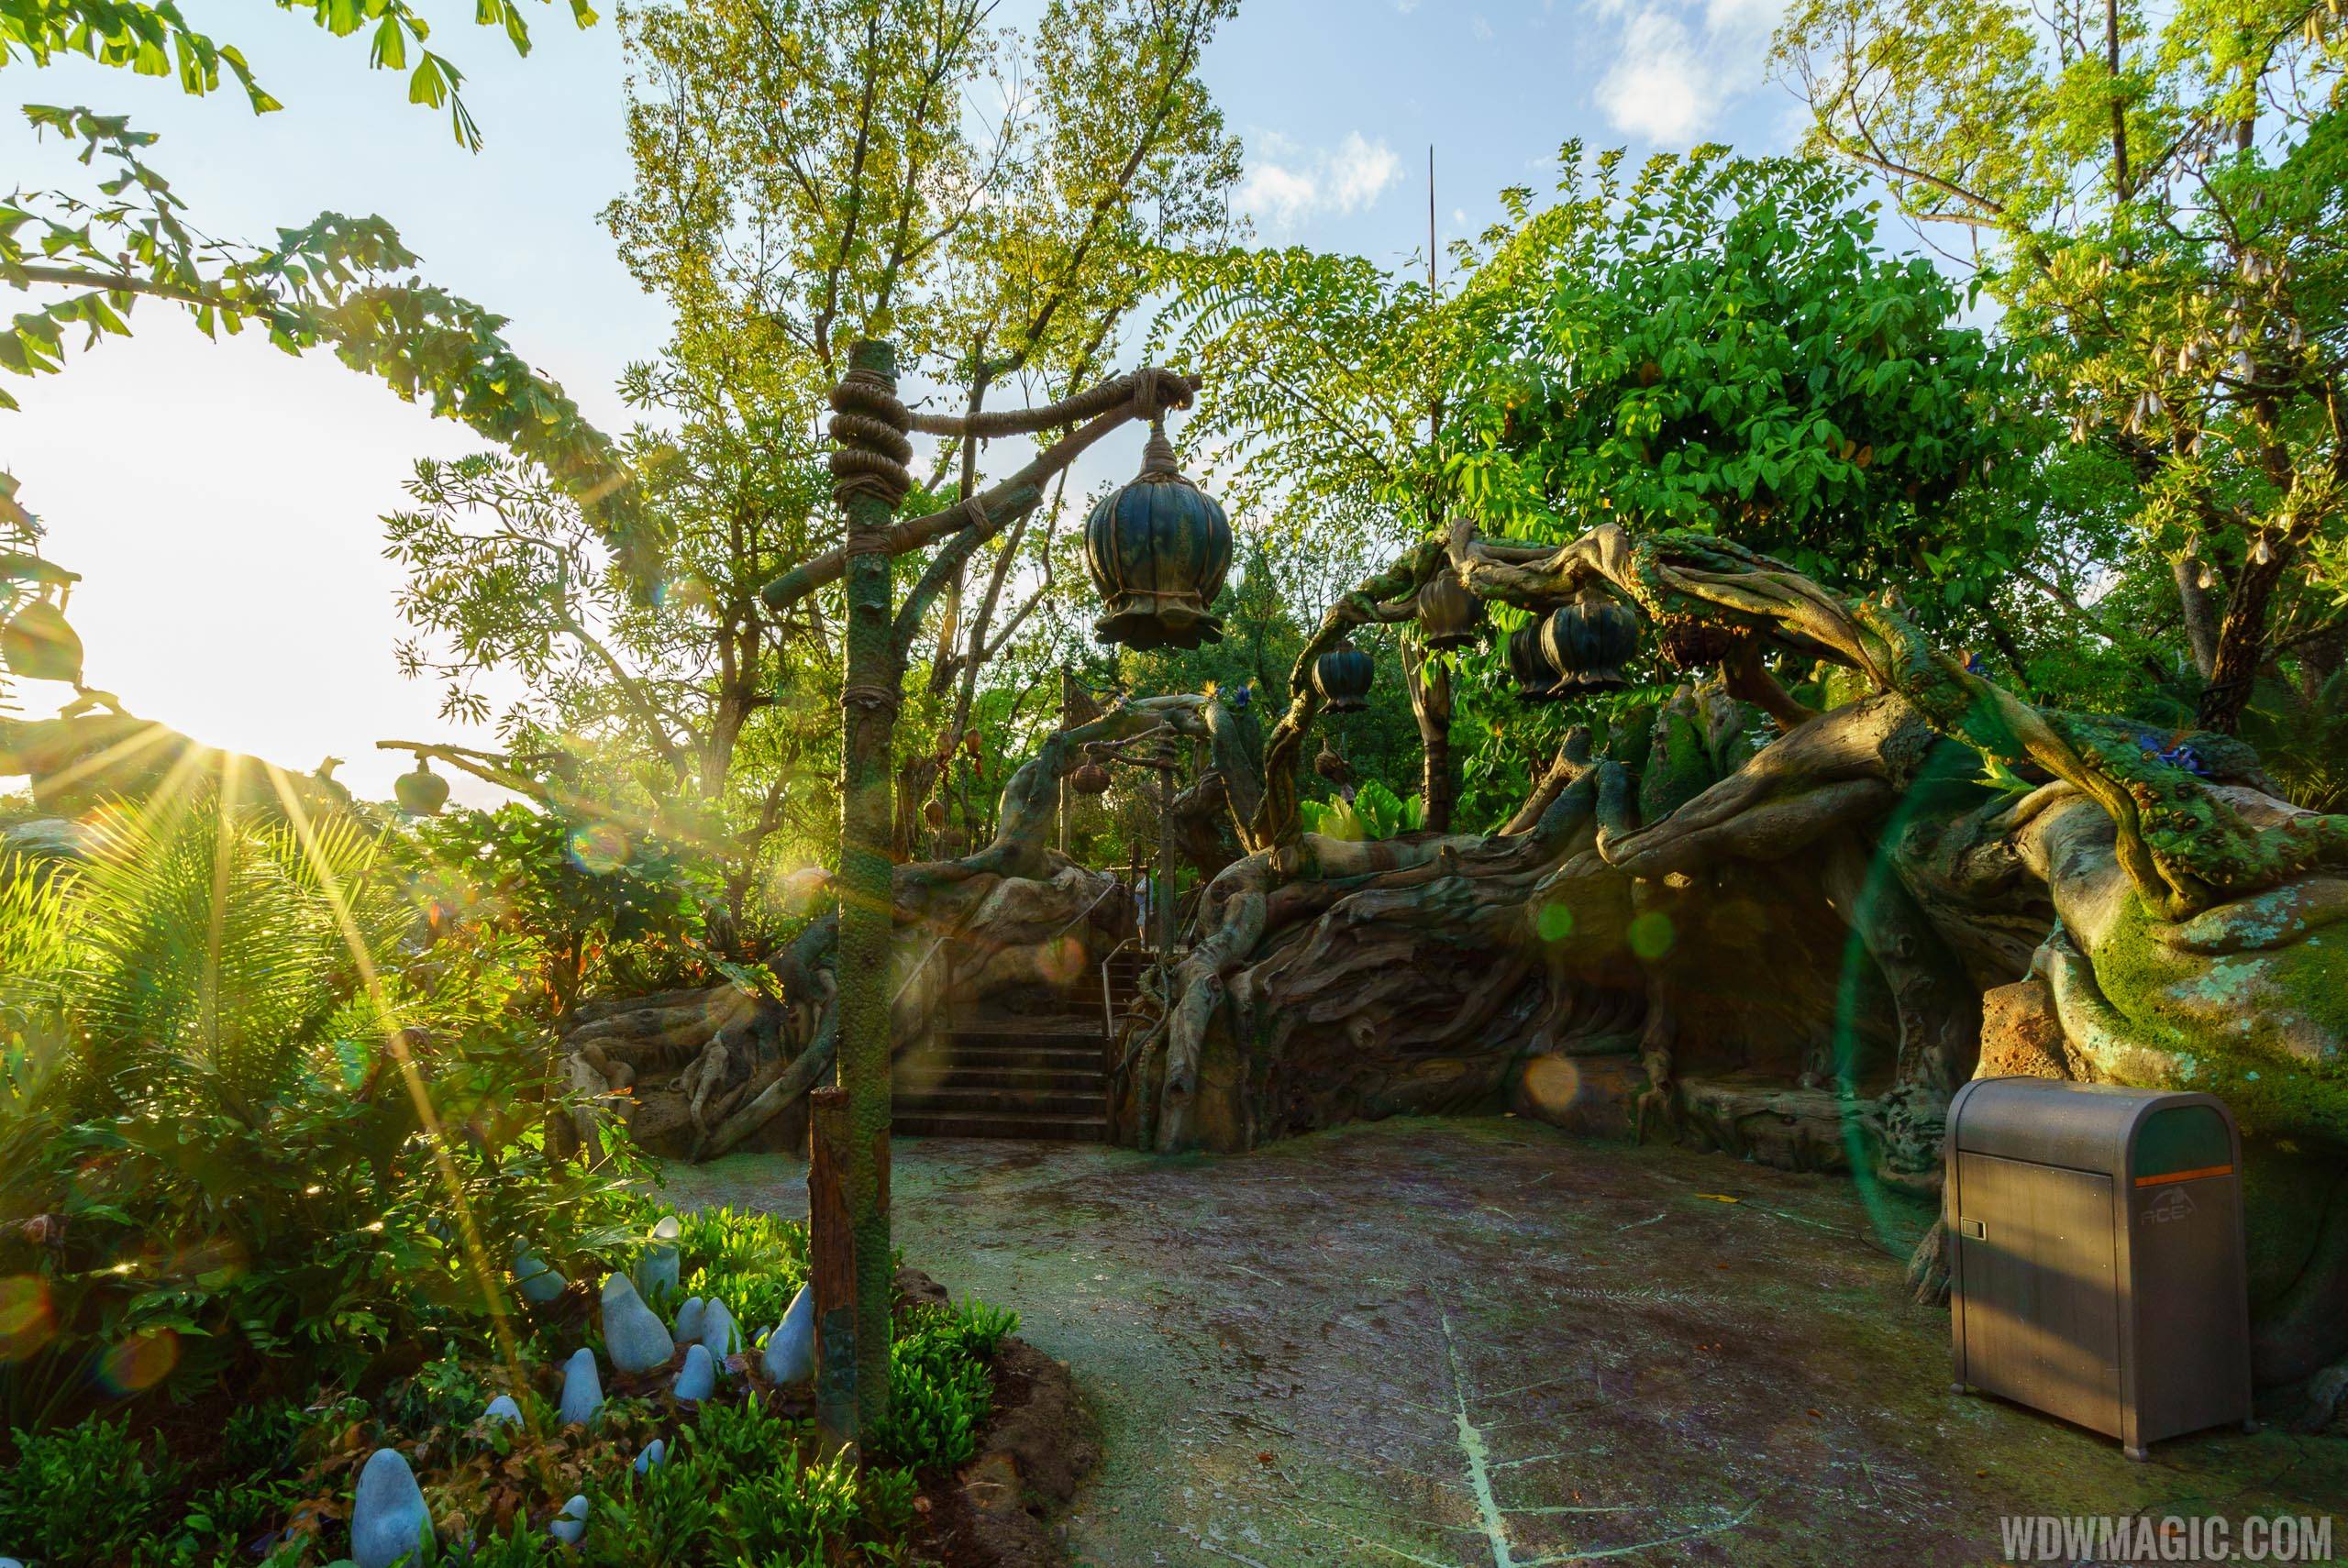 The Landscape of Pandora - The World of Avatar